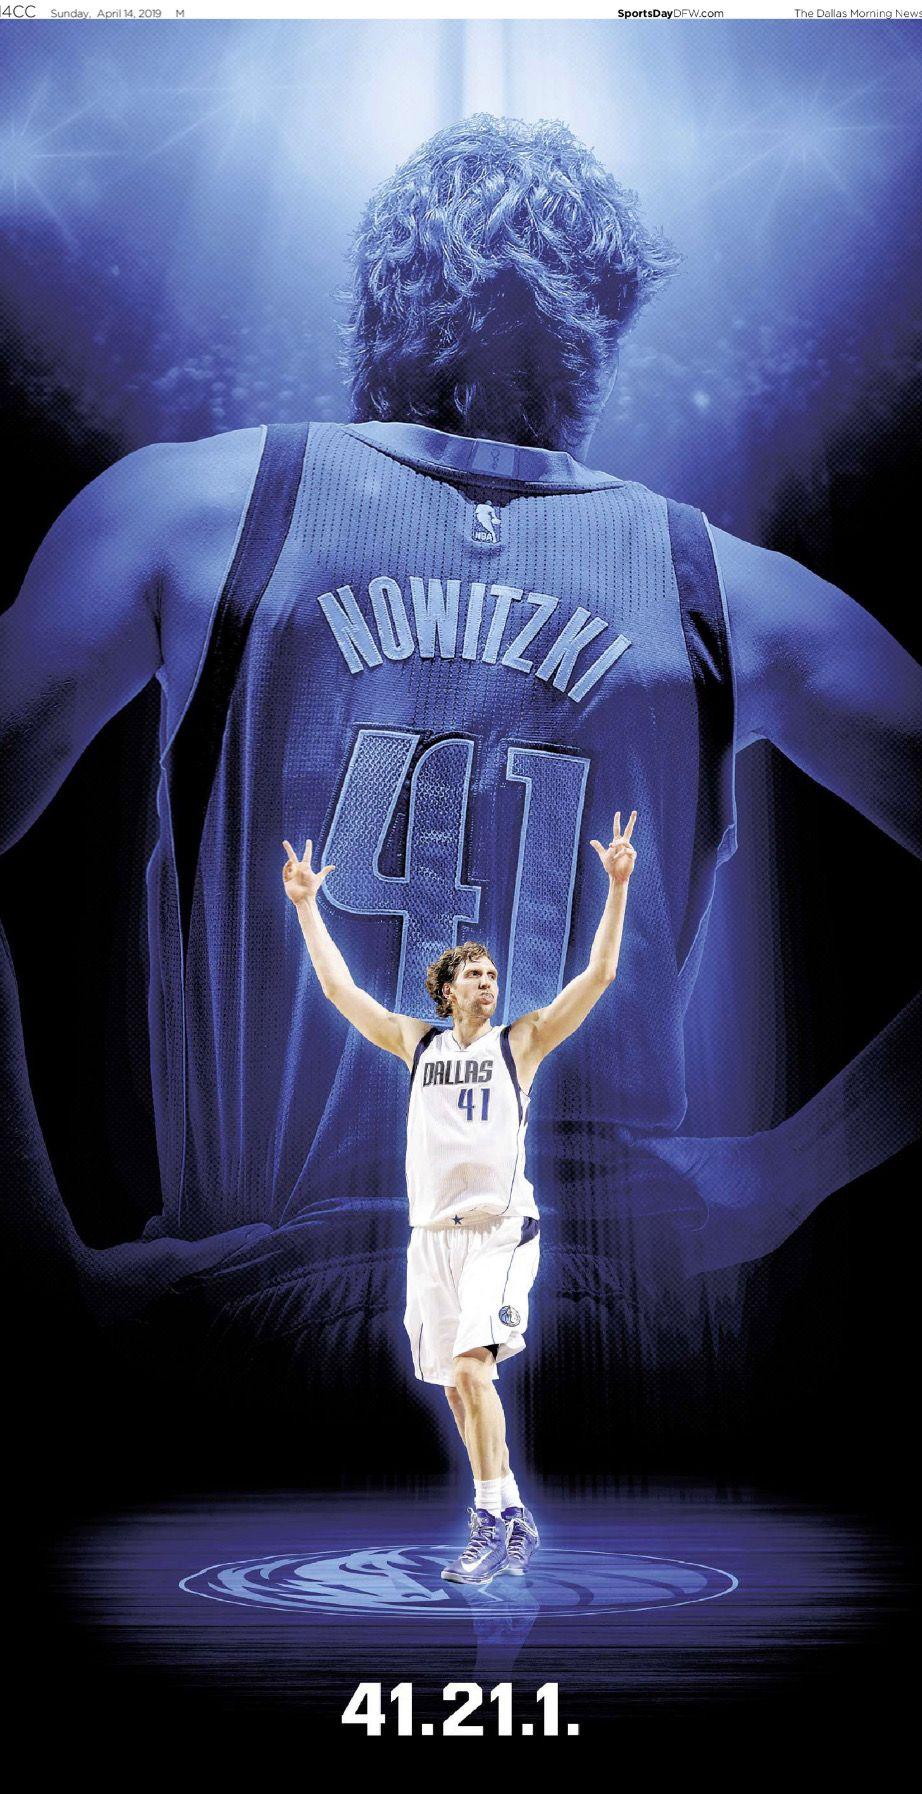 Dirk Nowitzki 41.21.1 ( played 21 seasons with 1 team) #Dirk #Mavs #Nowitzki #Dallas #Maveric. Dallas mavericks basketball, Dallas mavericks, Dallas basketball